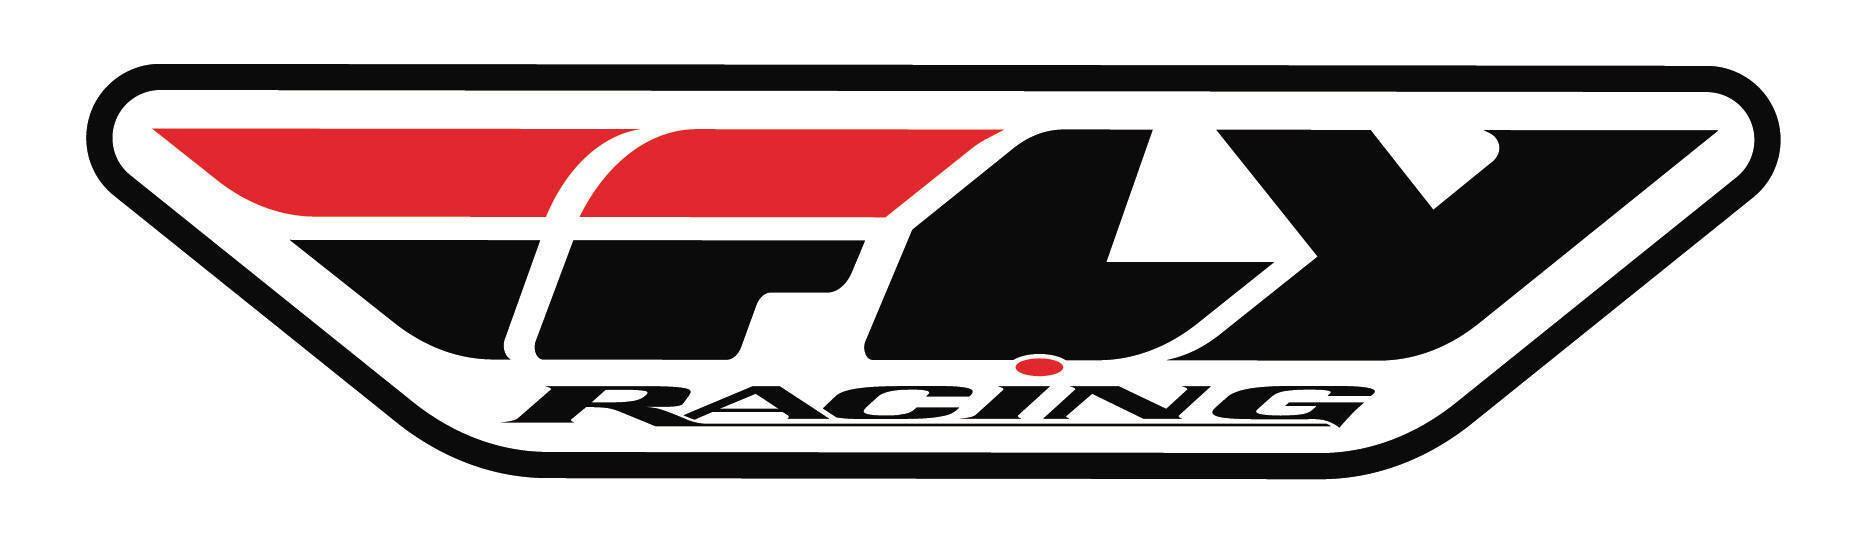 Racing Parts Logo - FLY RACING - Blockers Enterprises, Inc.